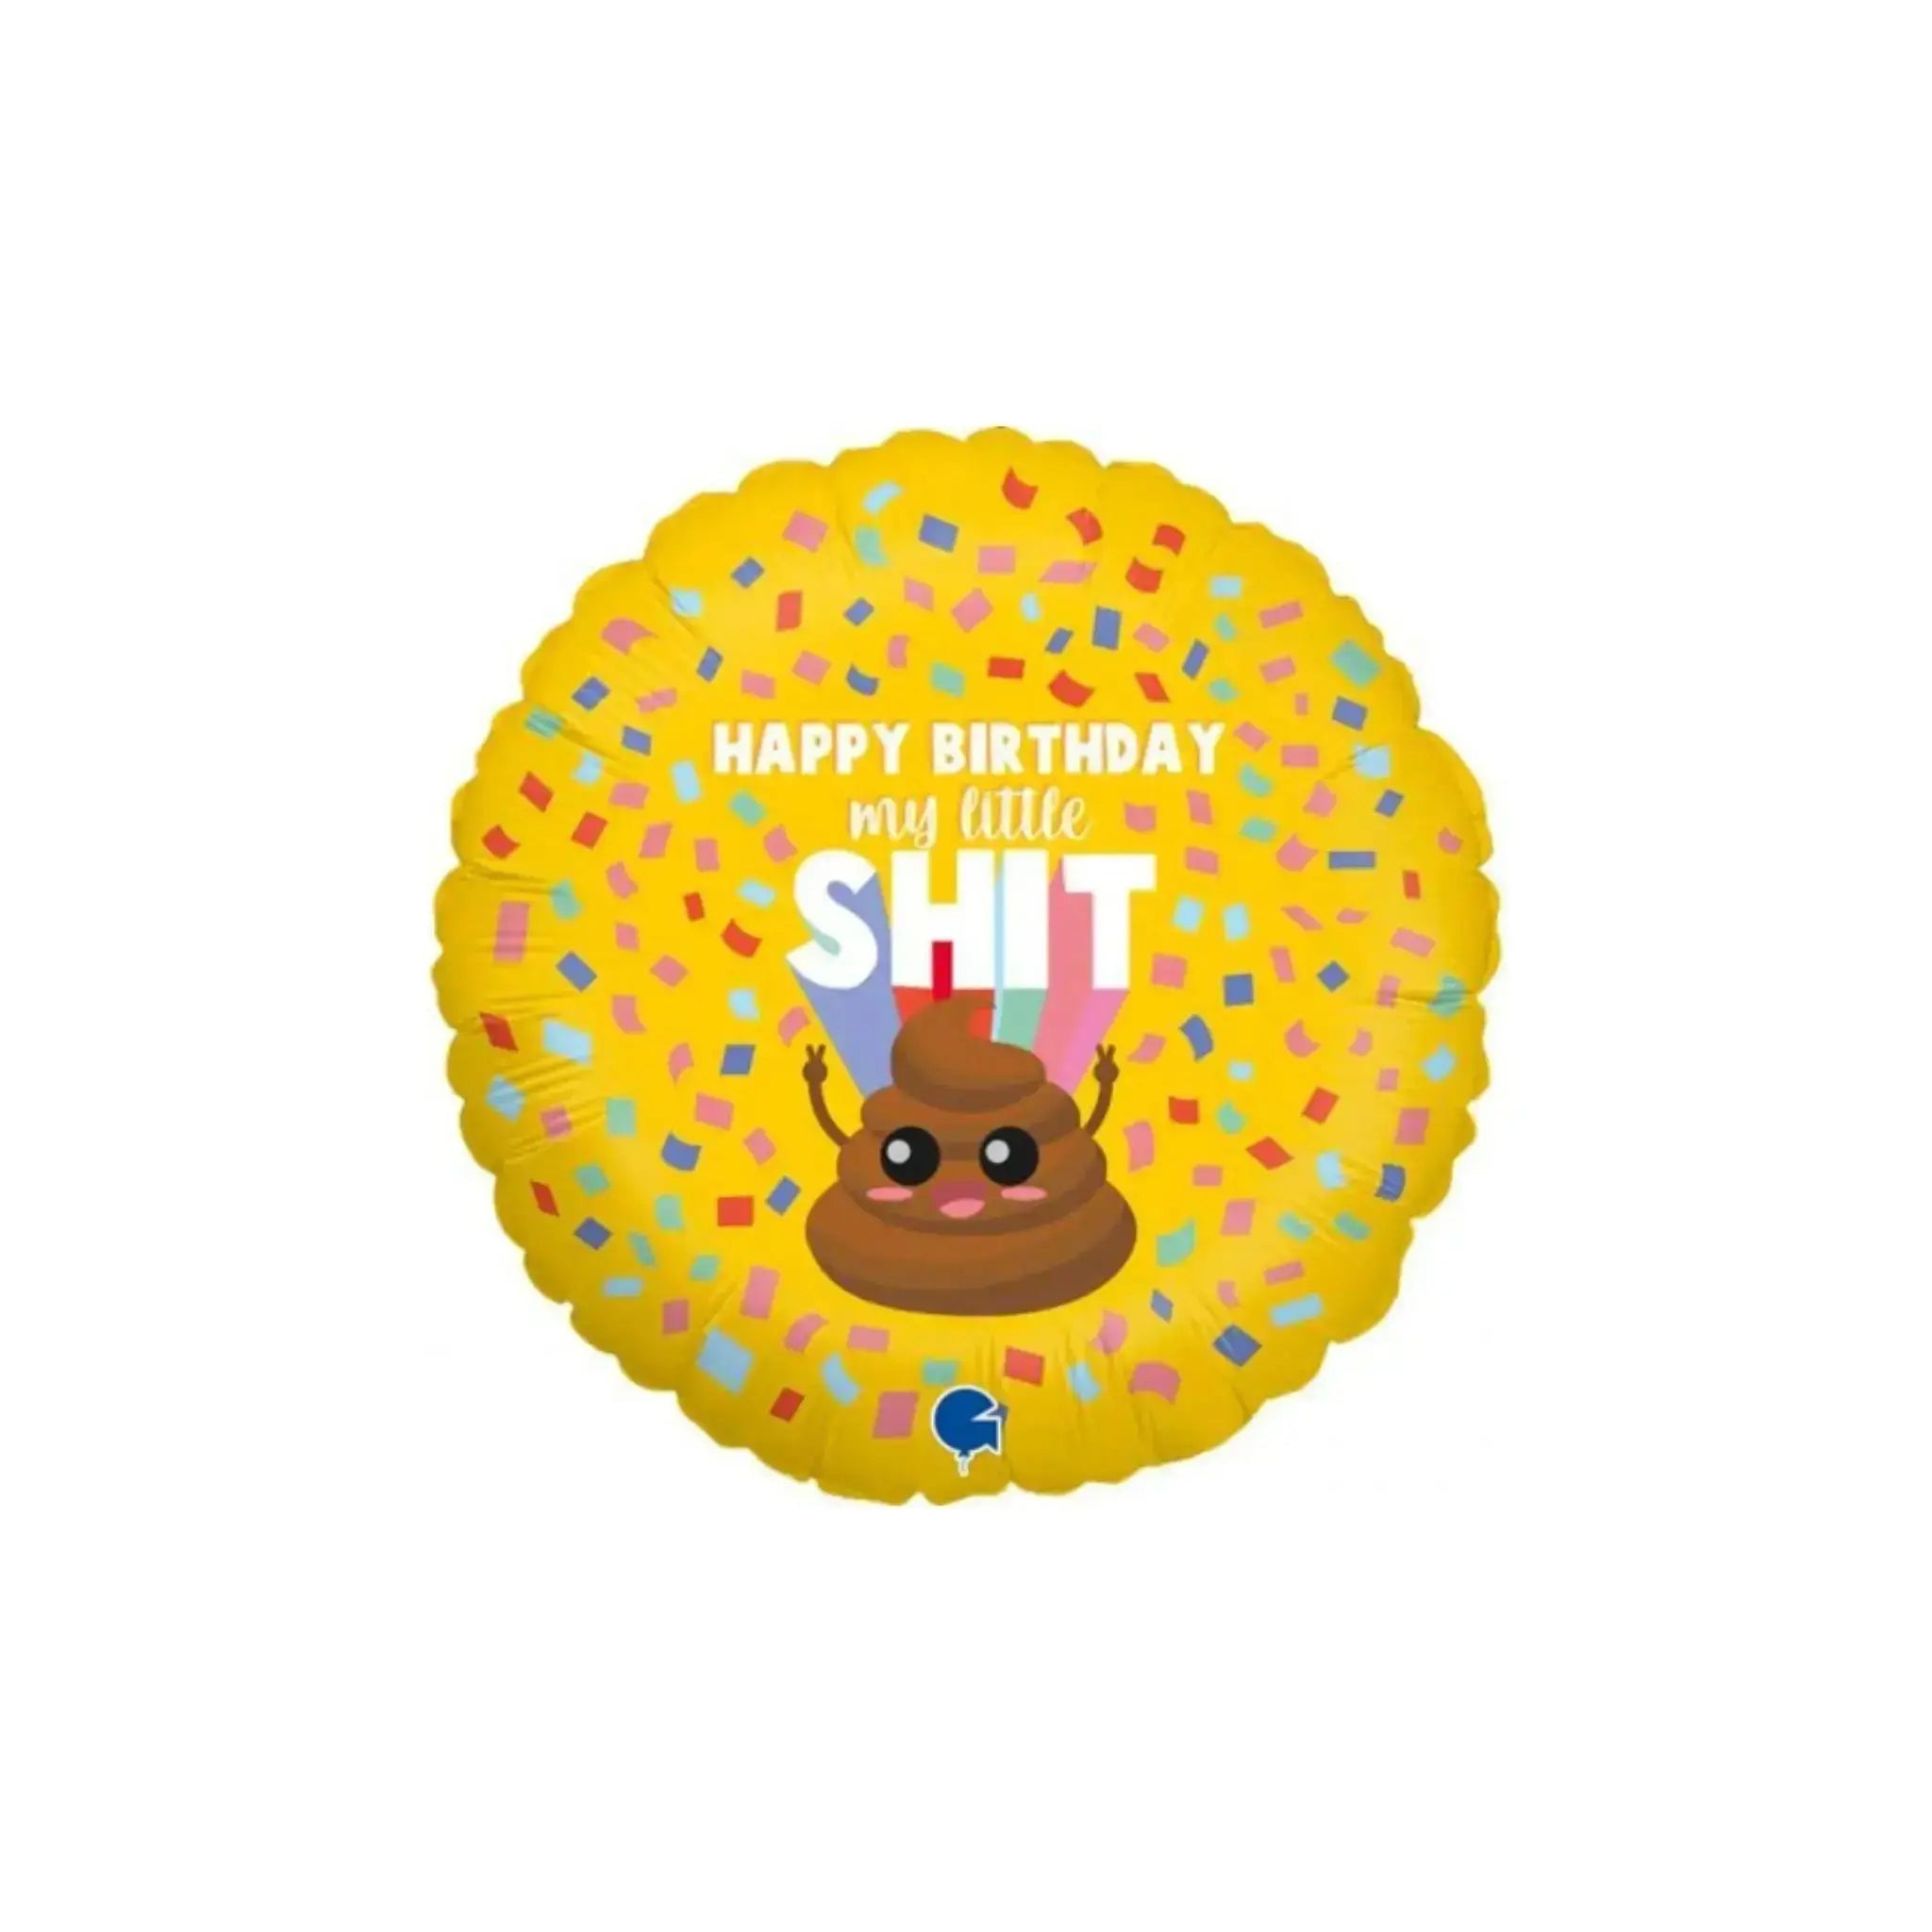 Happy Birthday Little Shit Balloon | The Party Hut